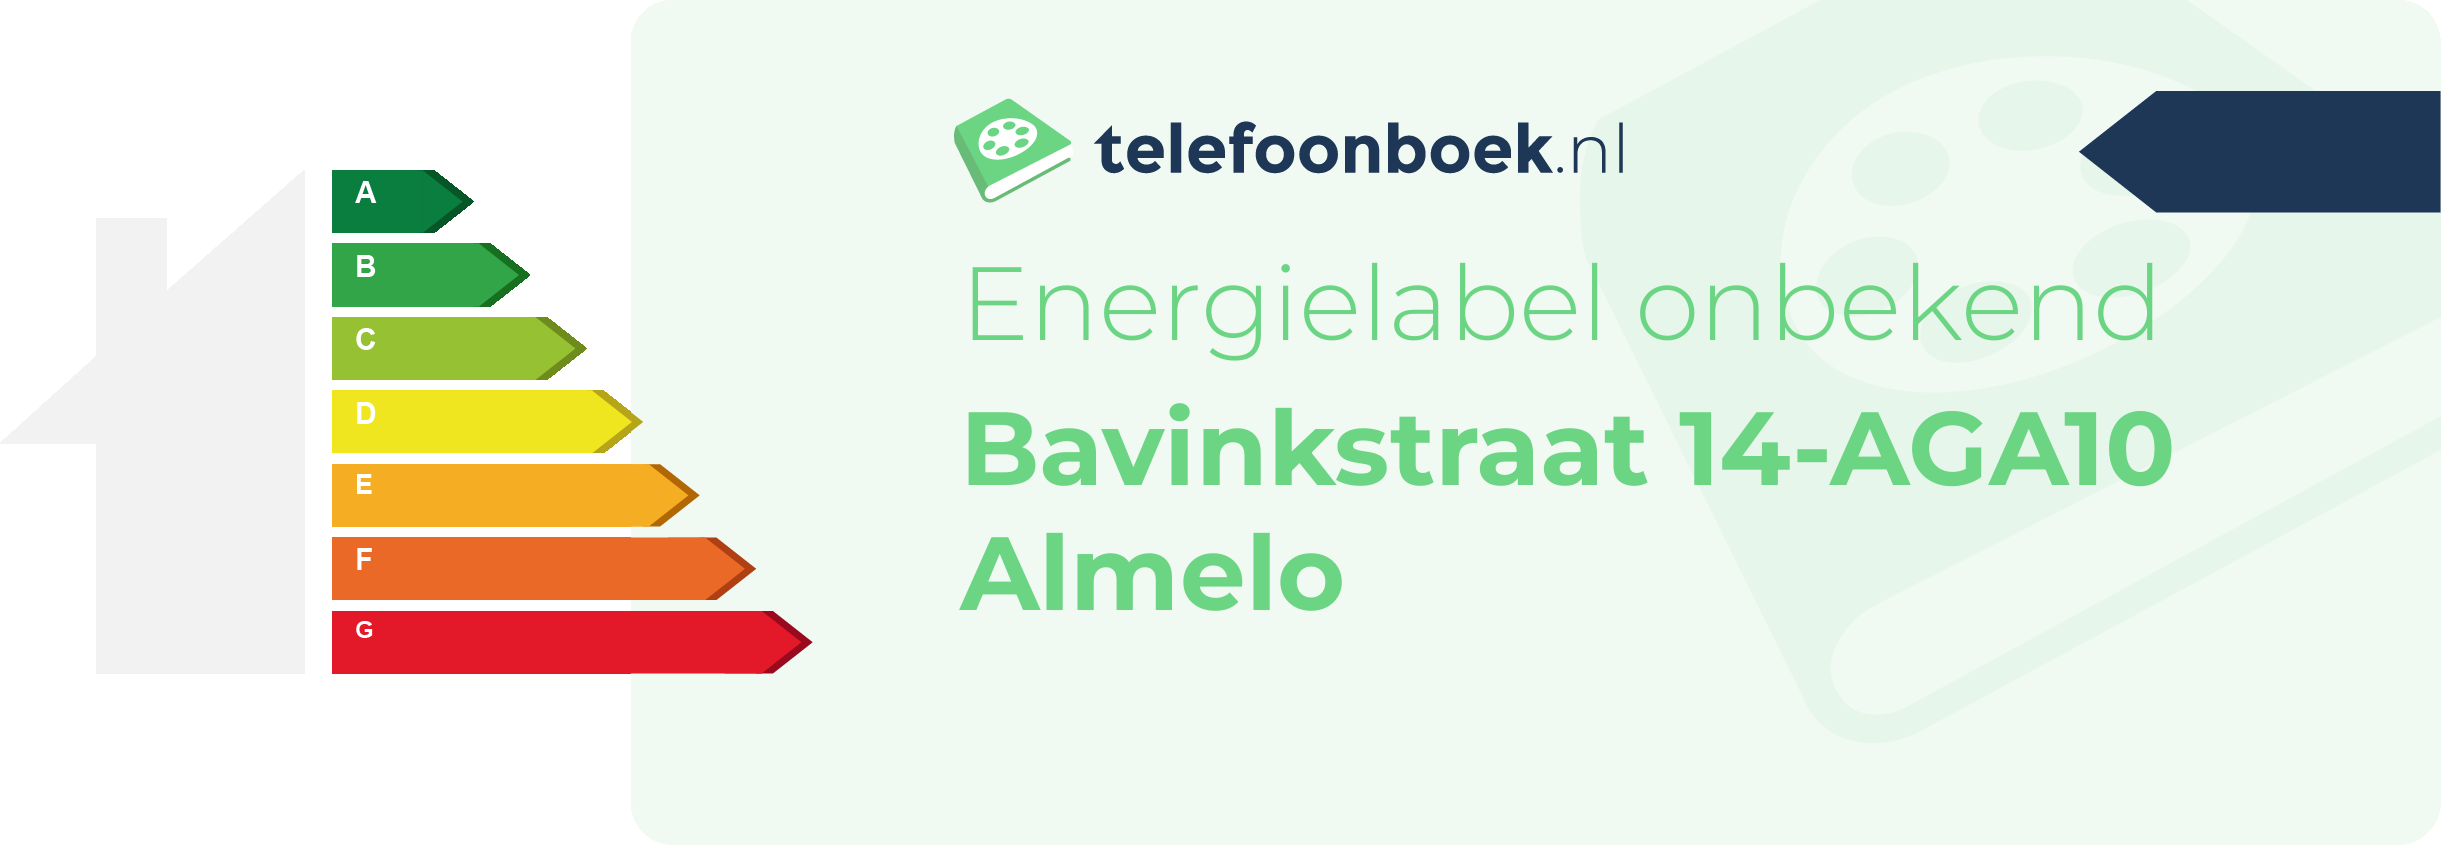 Energielabel Bavinkstraat 14-AGA10 Almelo